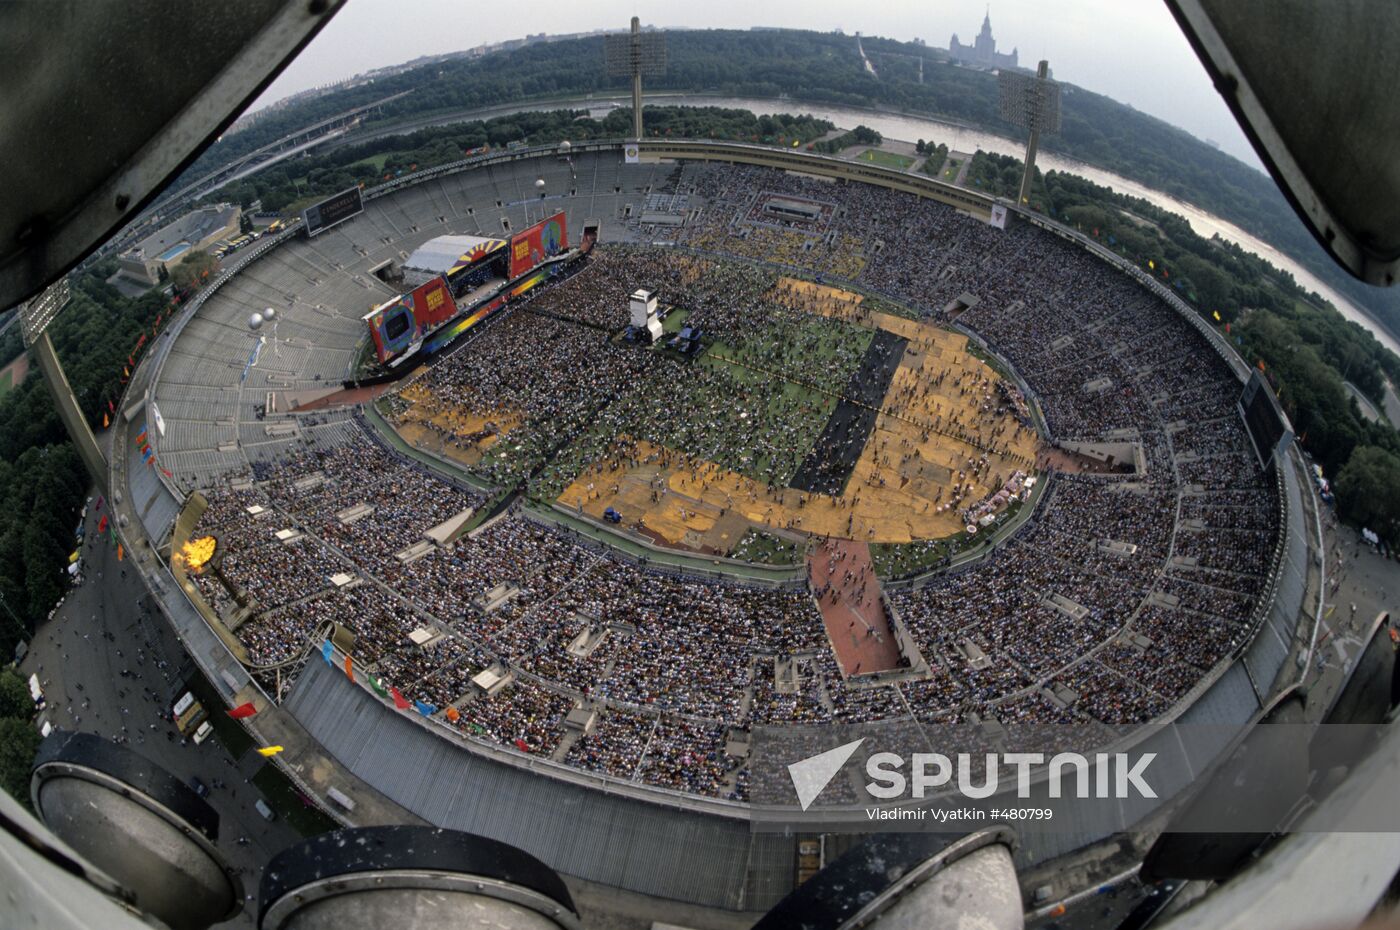 Music fans attending Moscow Music Peace Festival | Sputnik Mediabank